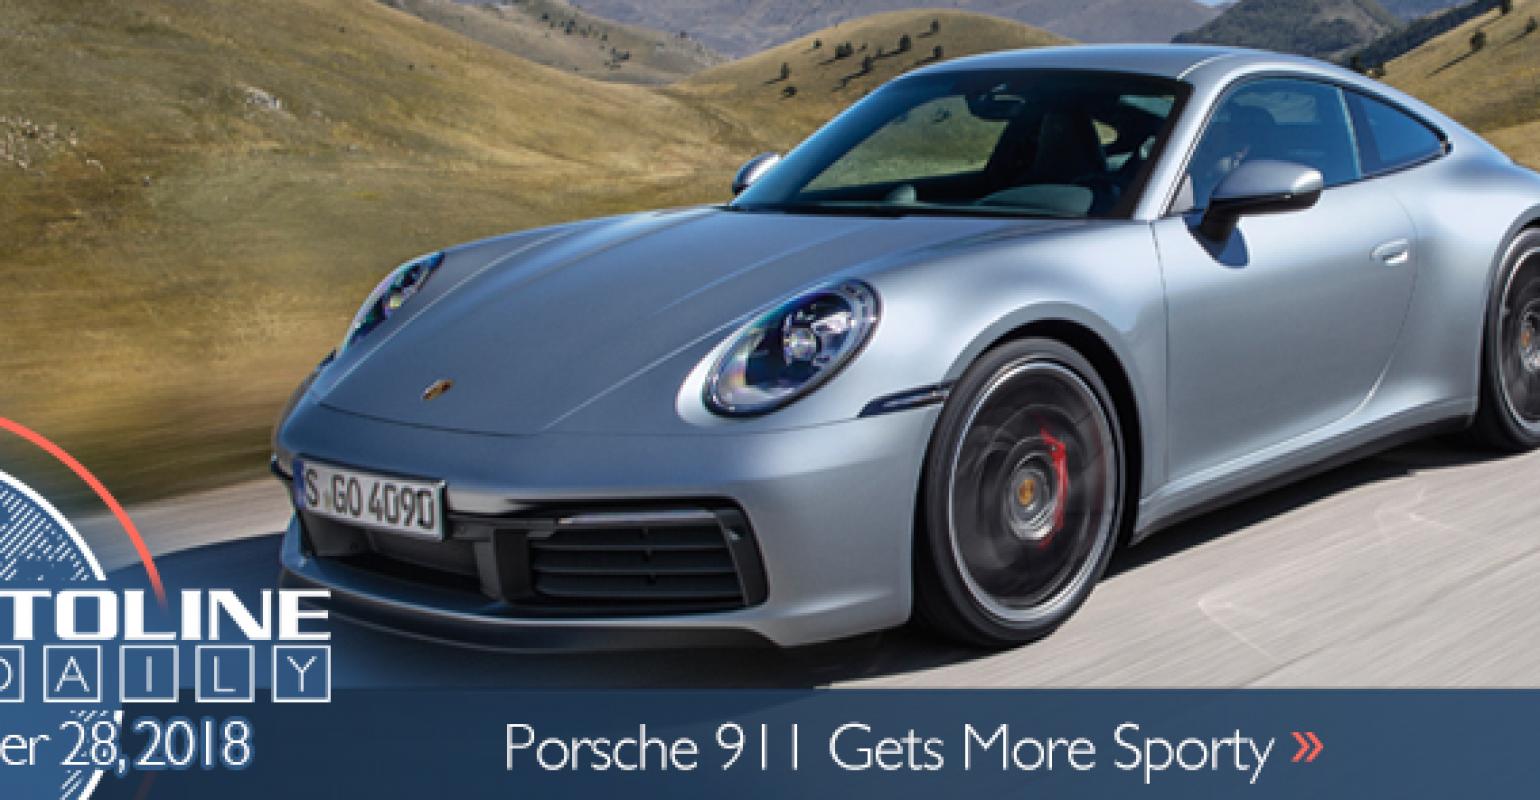 Porsche 911 Autoline Nov. 28